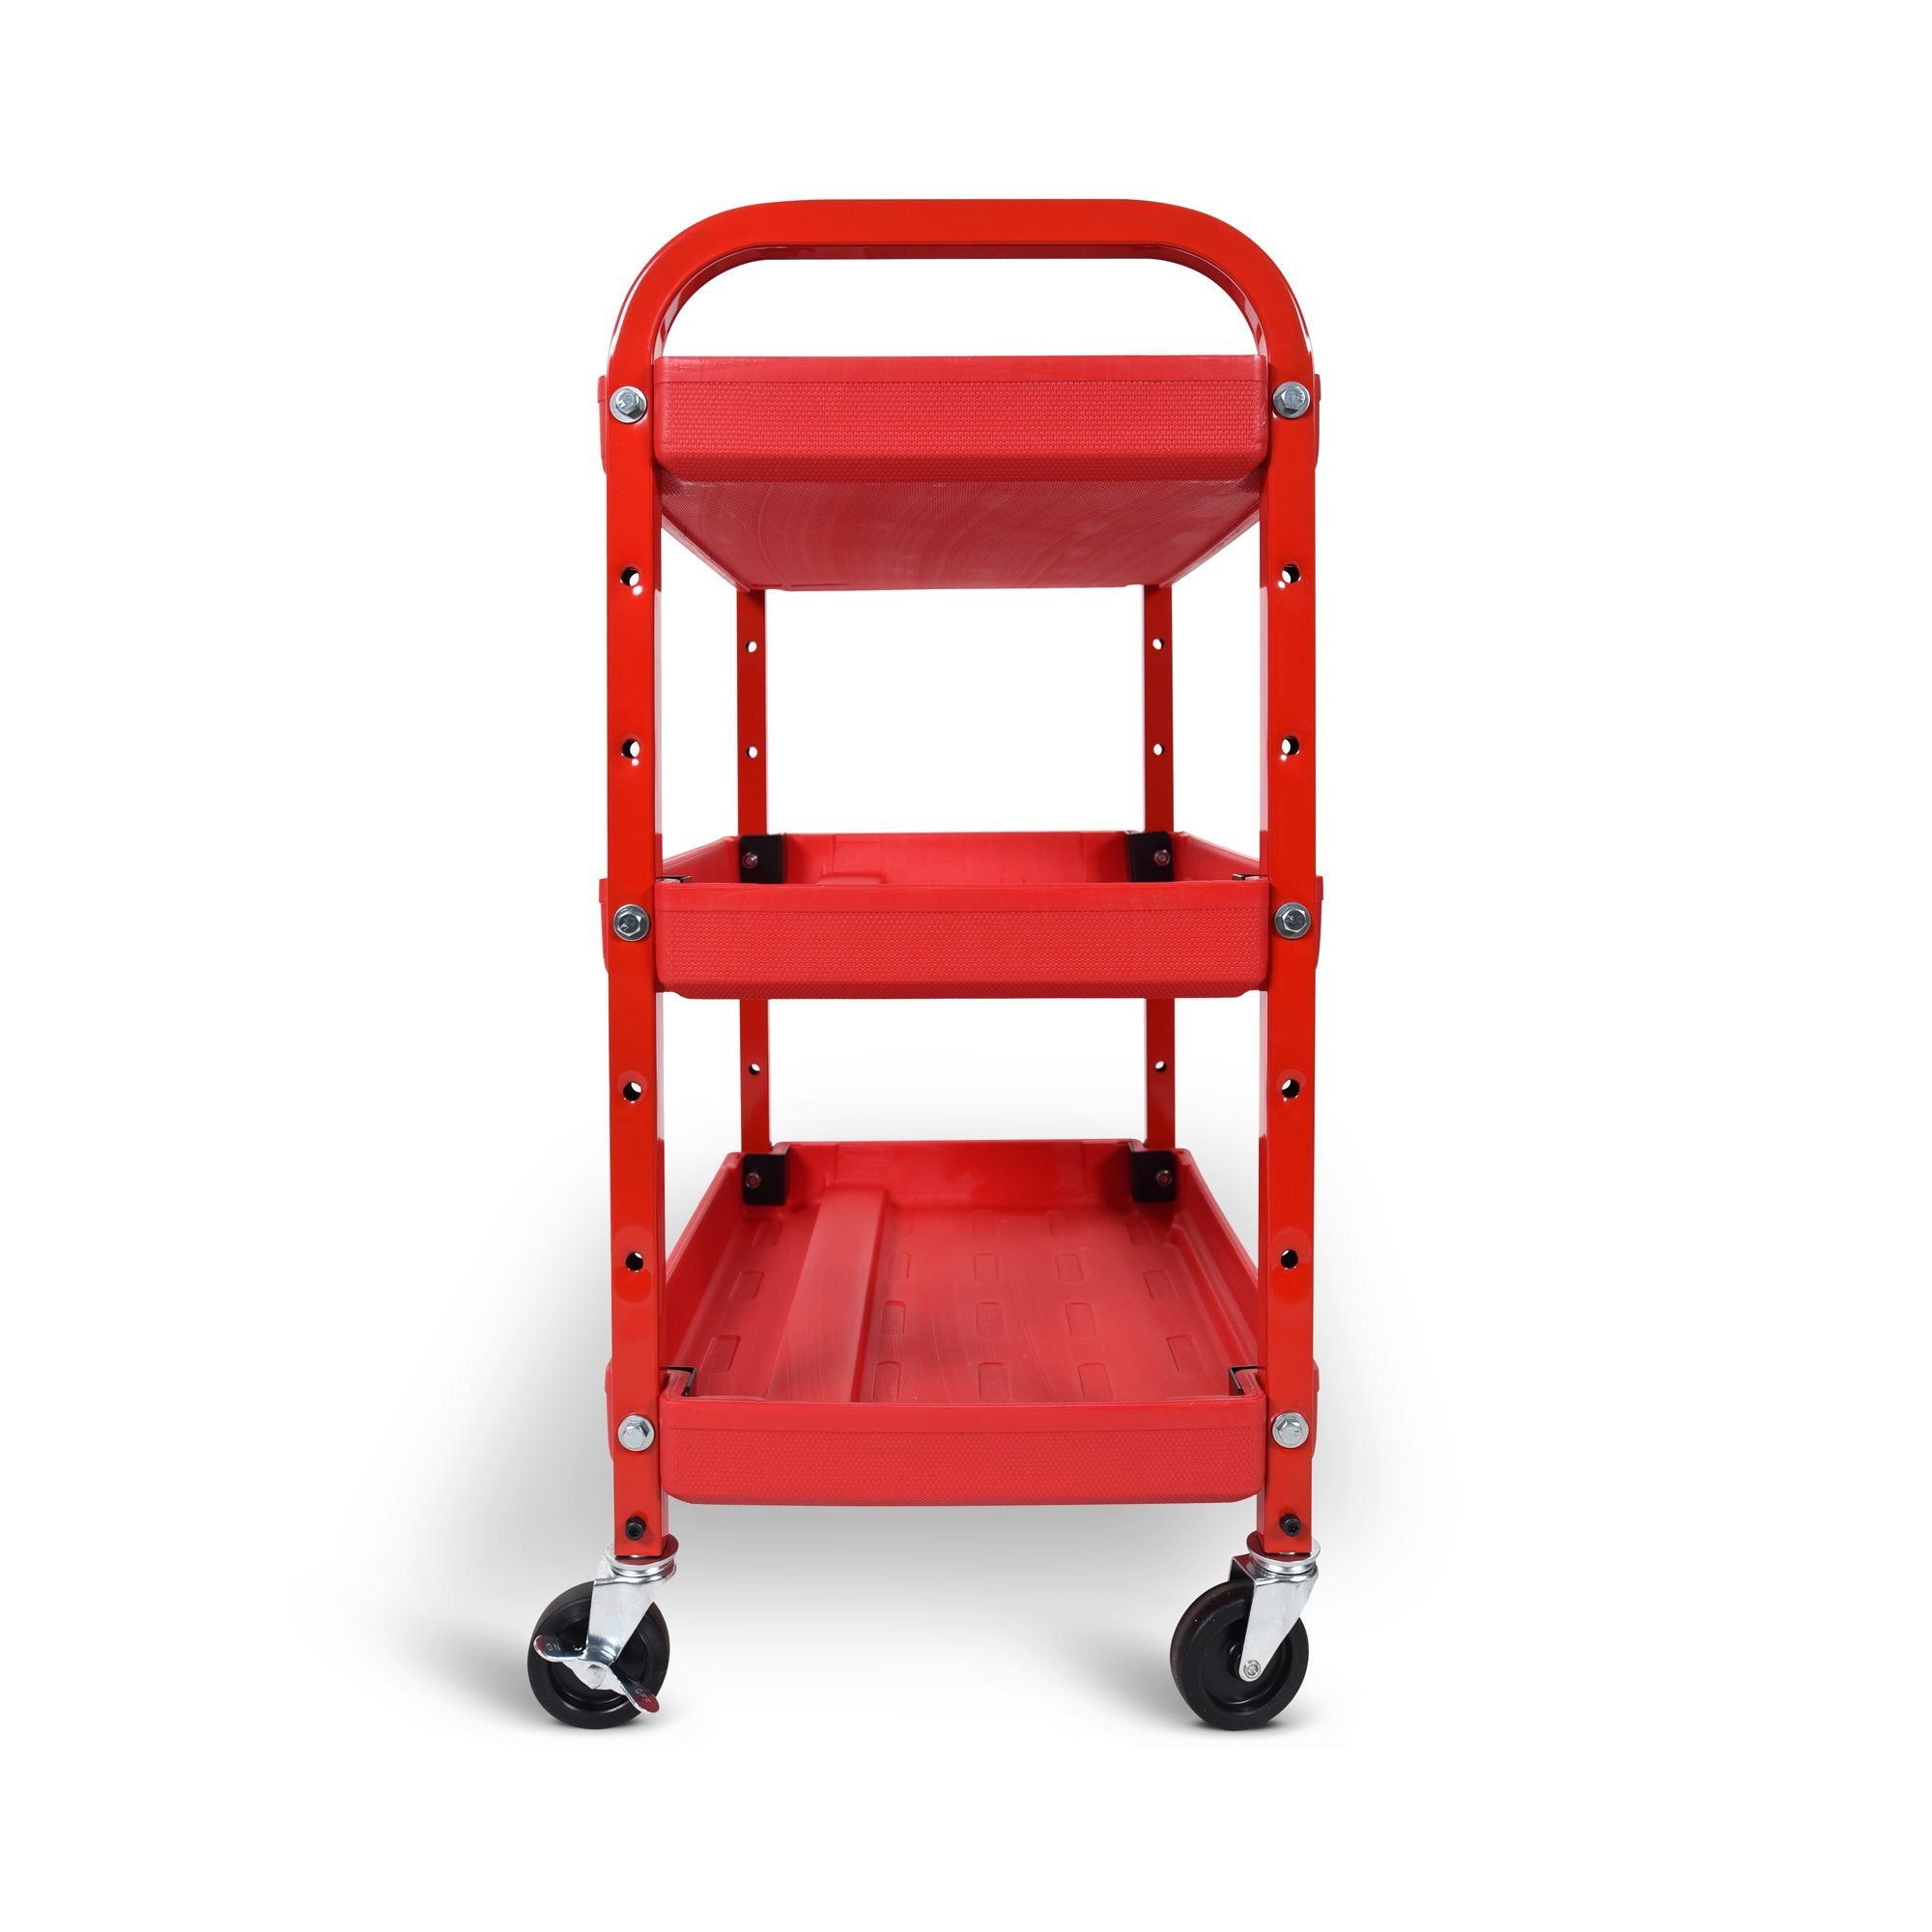 Luxor 3 Shelf Utility Cart Red